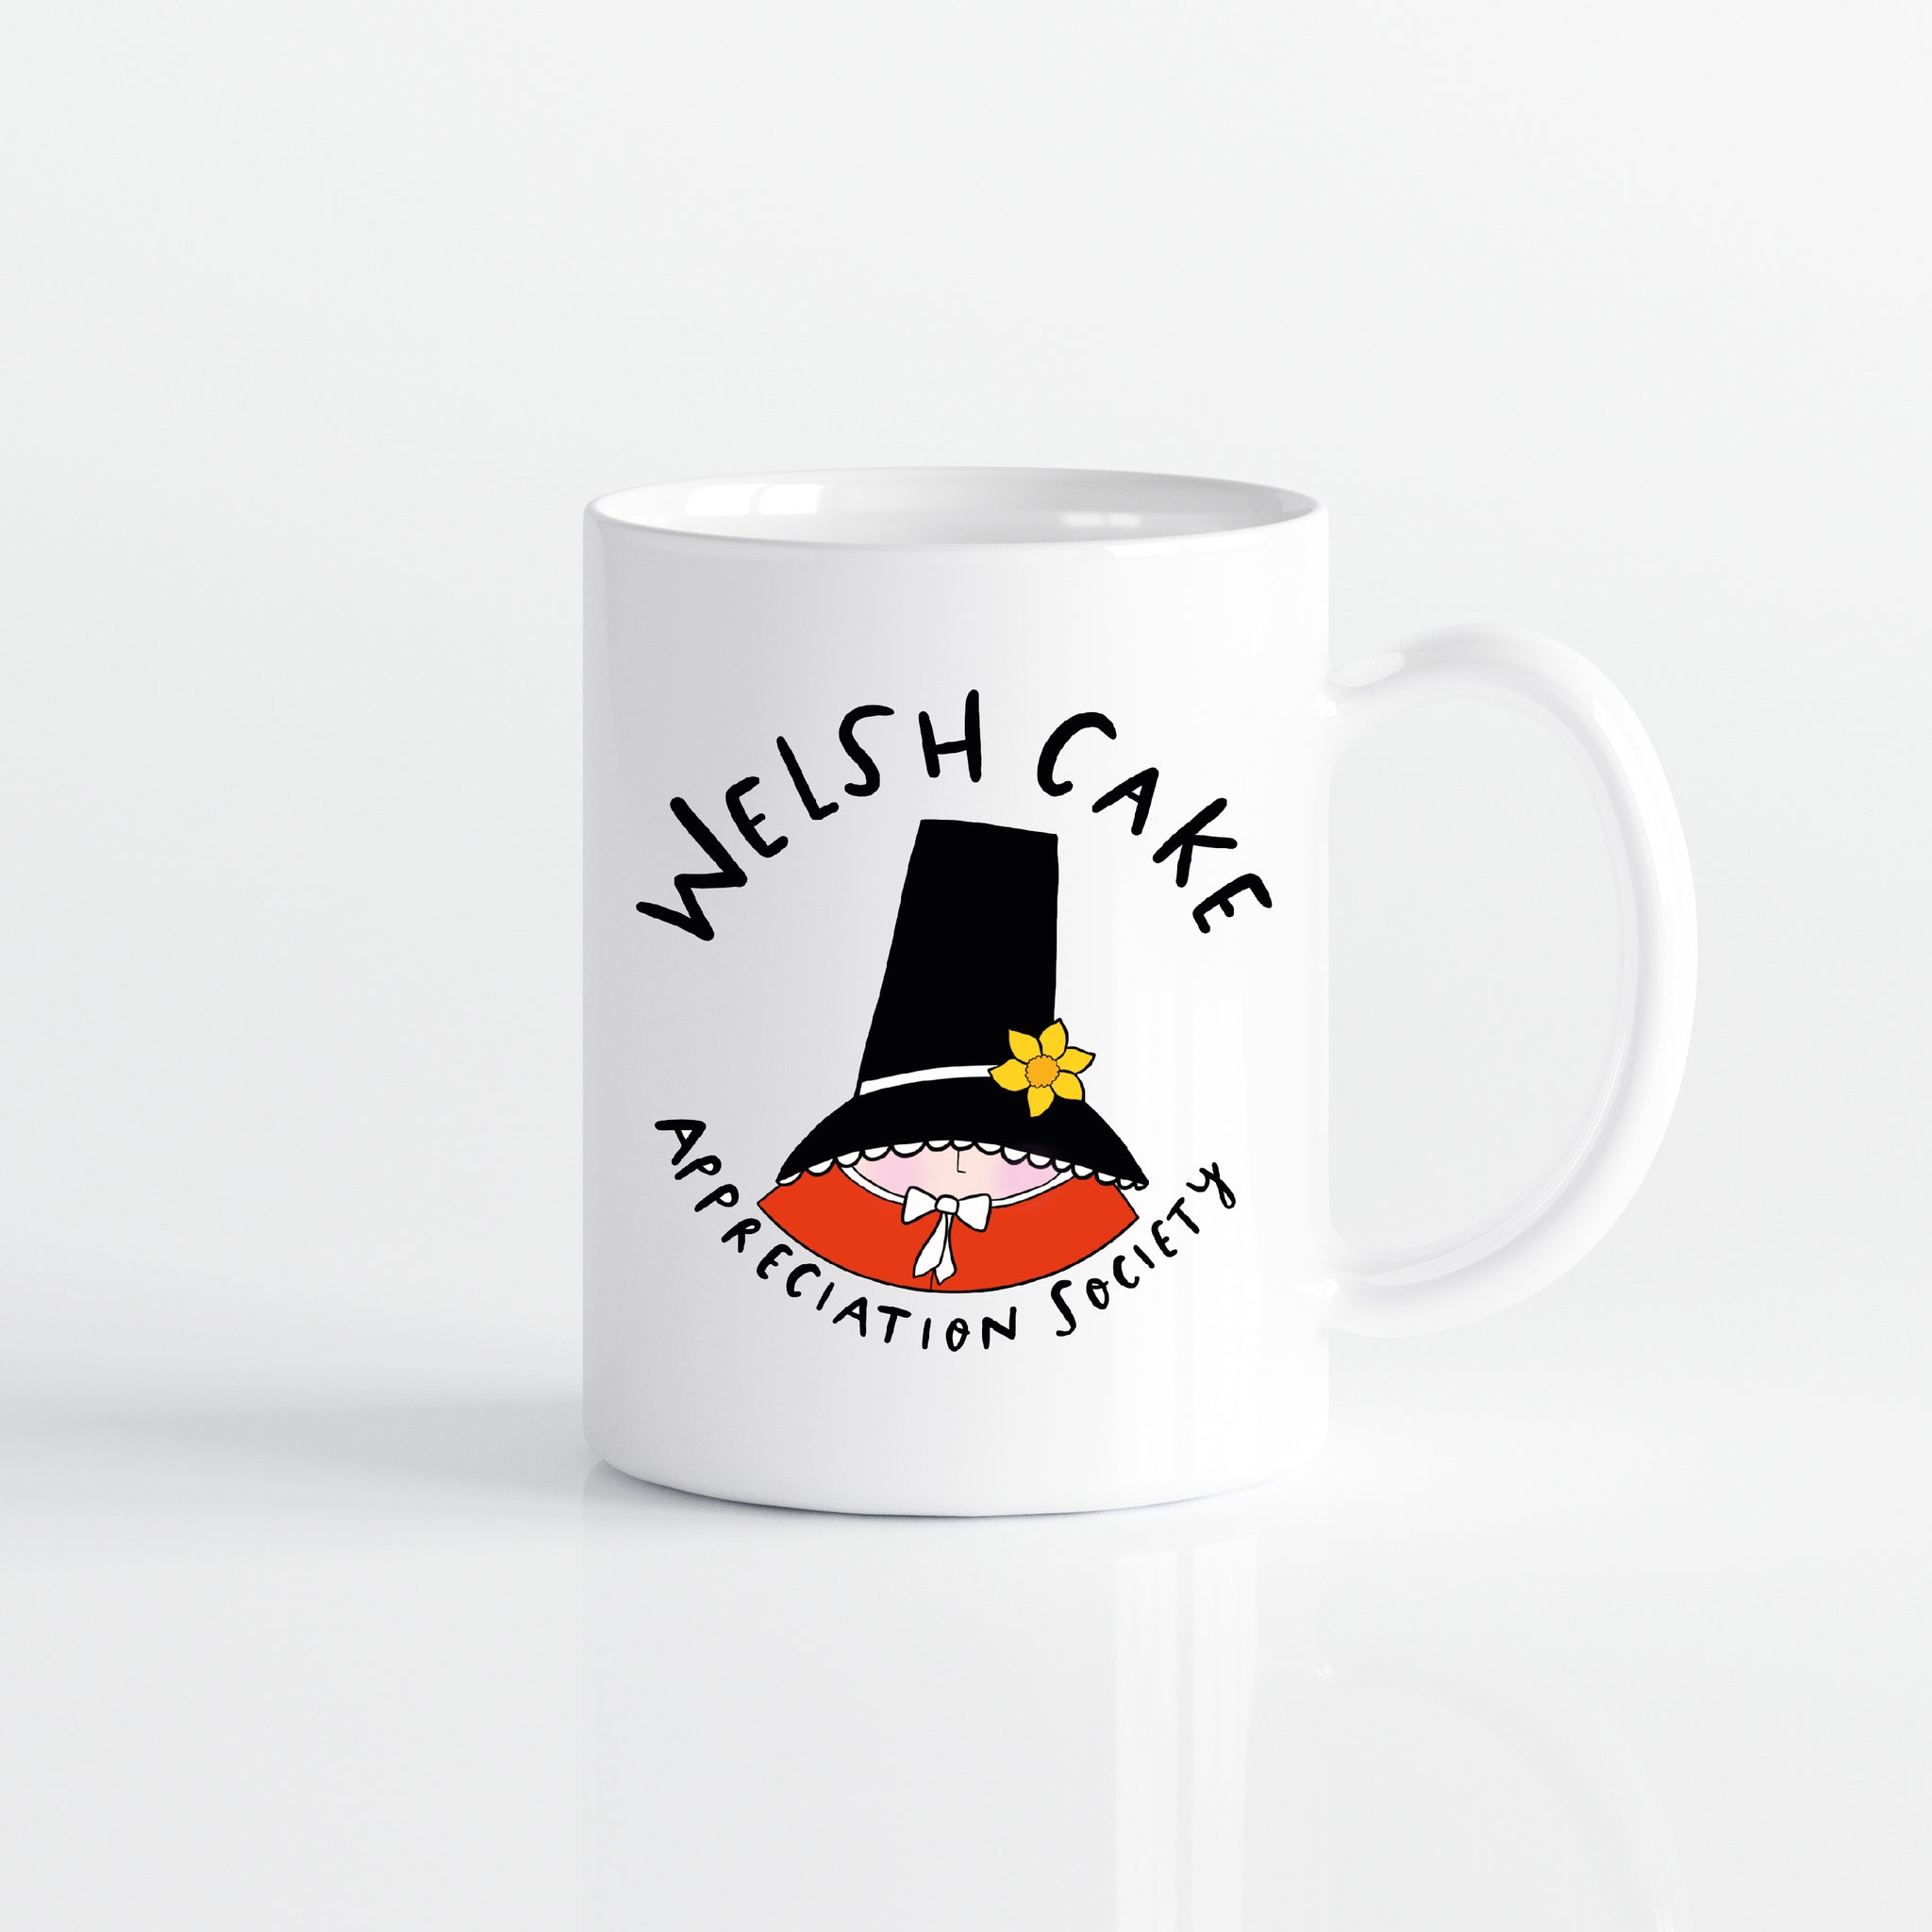 Welsh cake appreciation society mug